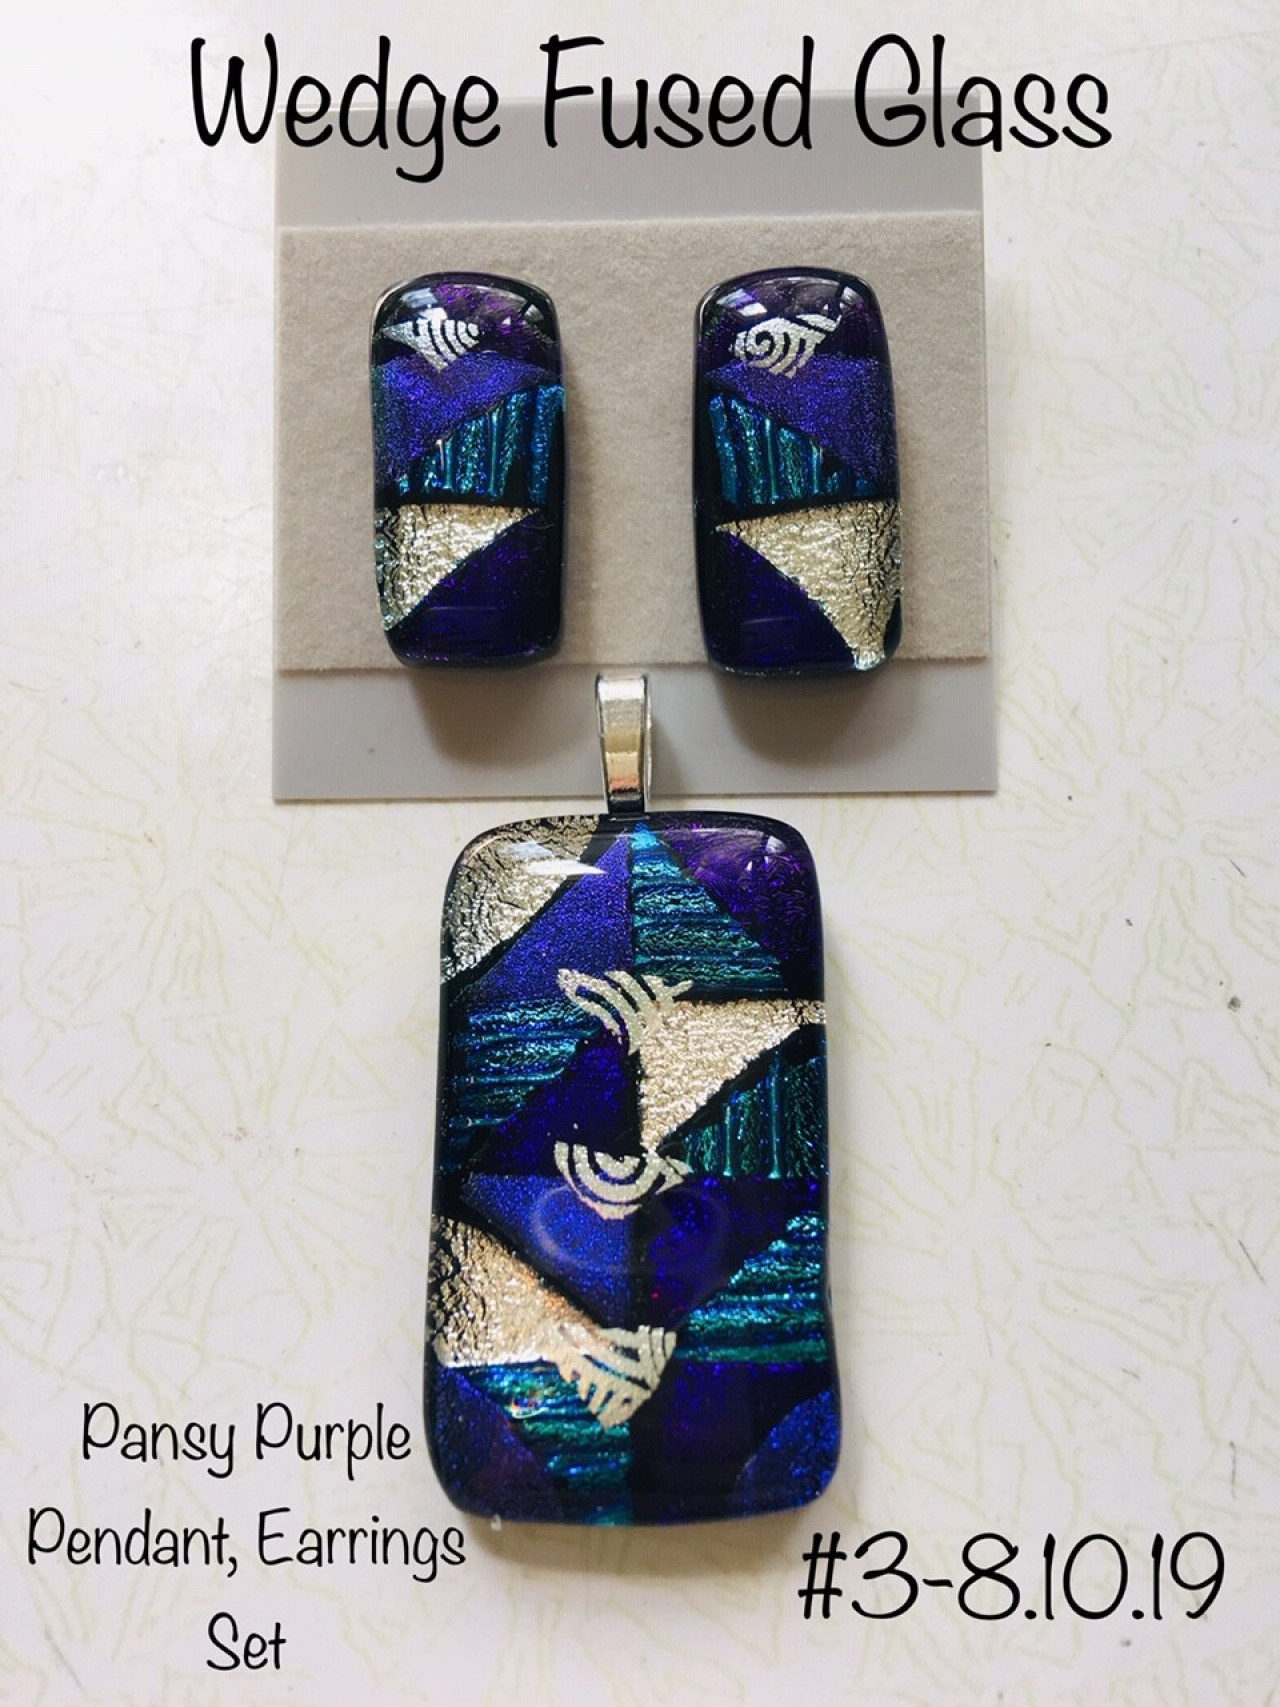 Pansy Purple pendant and earrings set